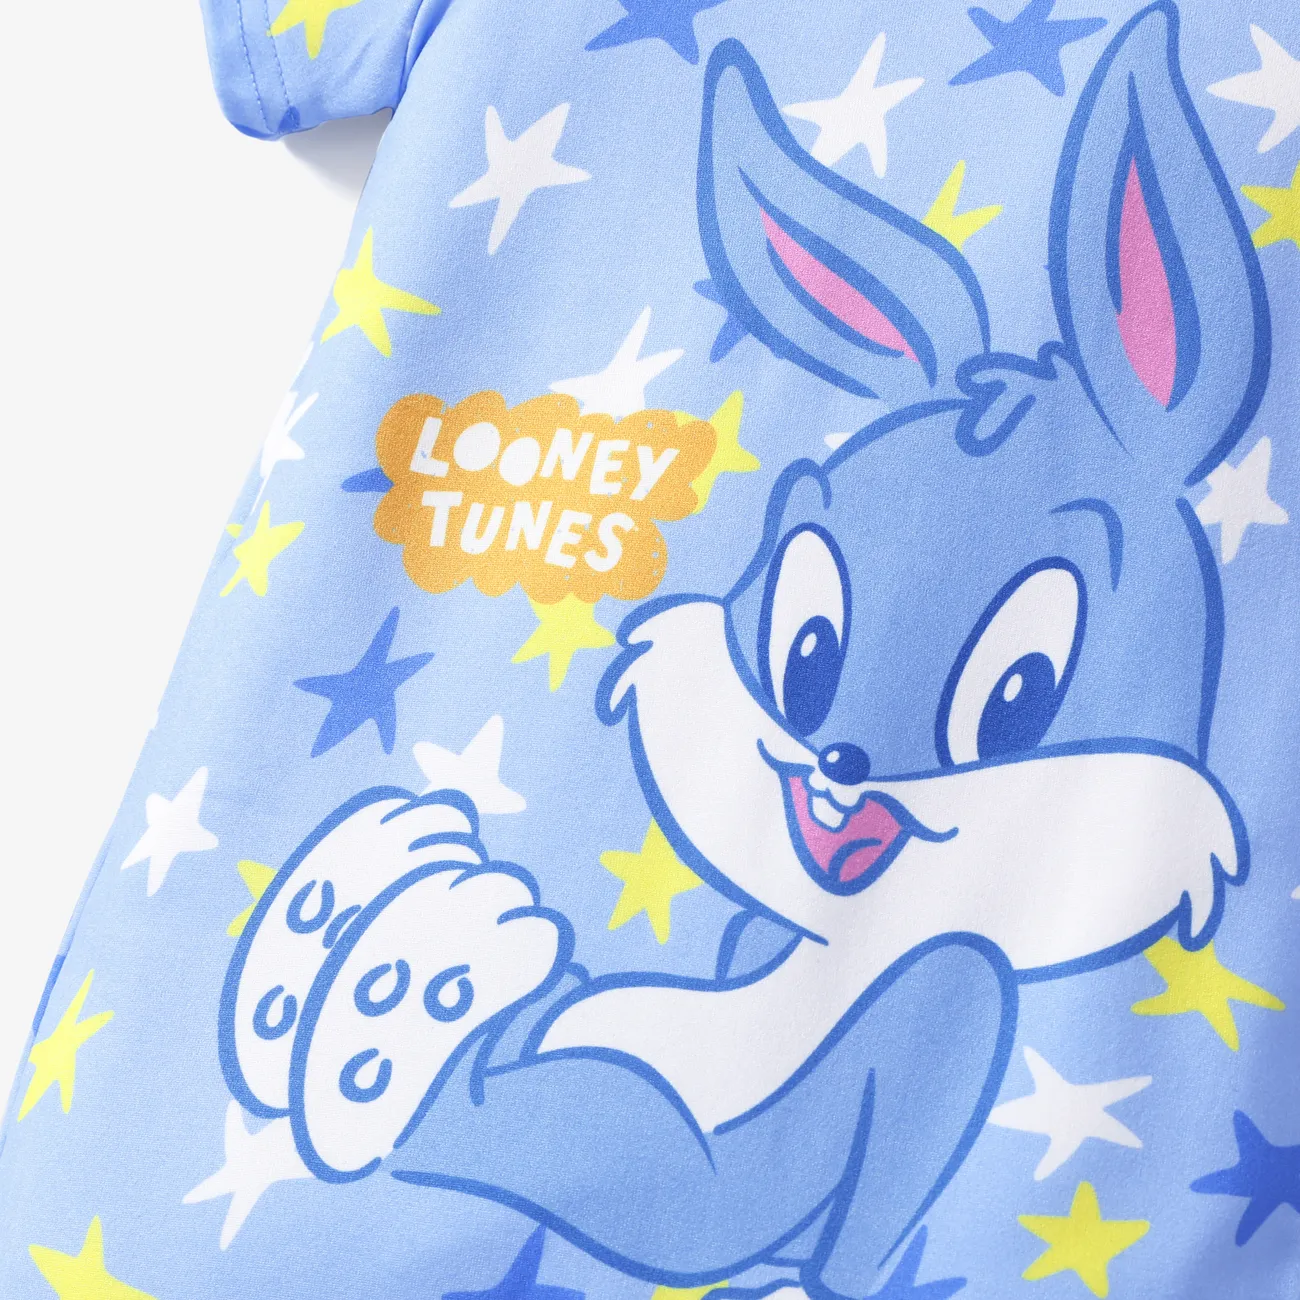 Looney Tunes Unisex Infantil Mamelucos y monos Azul big image 1